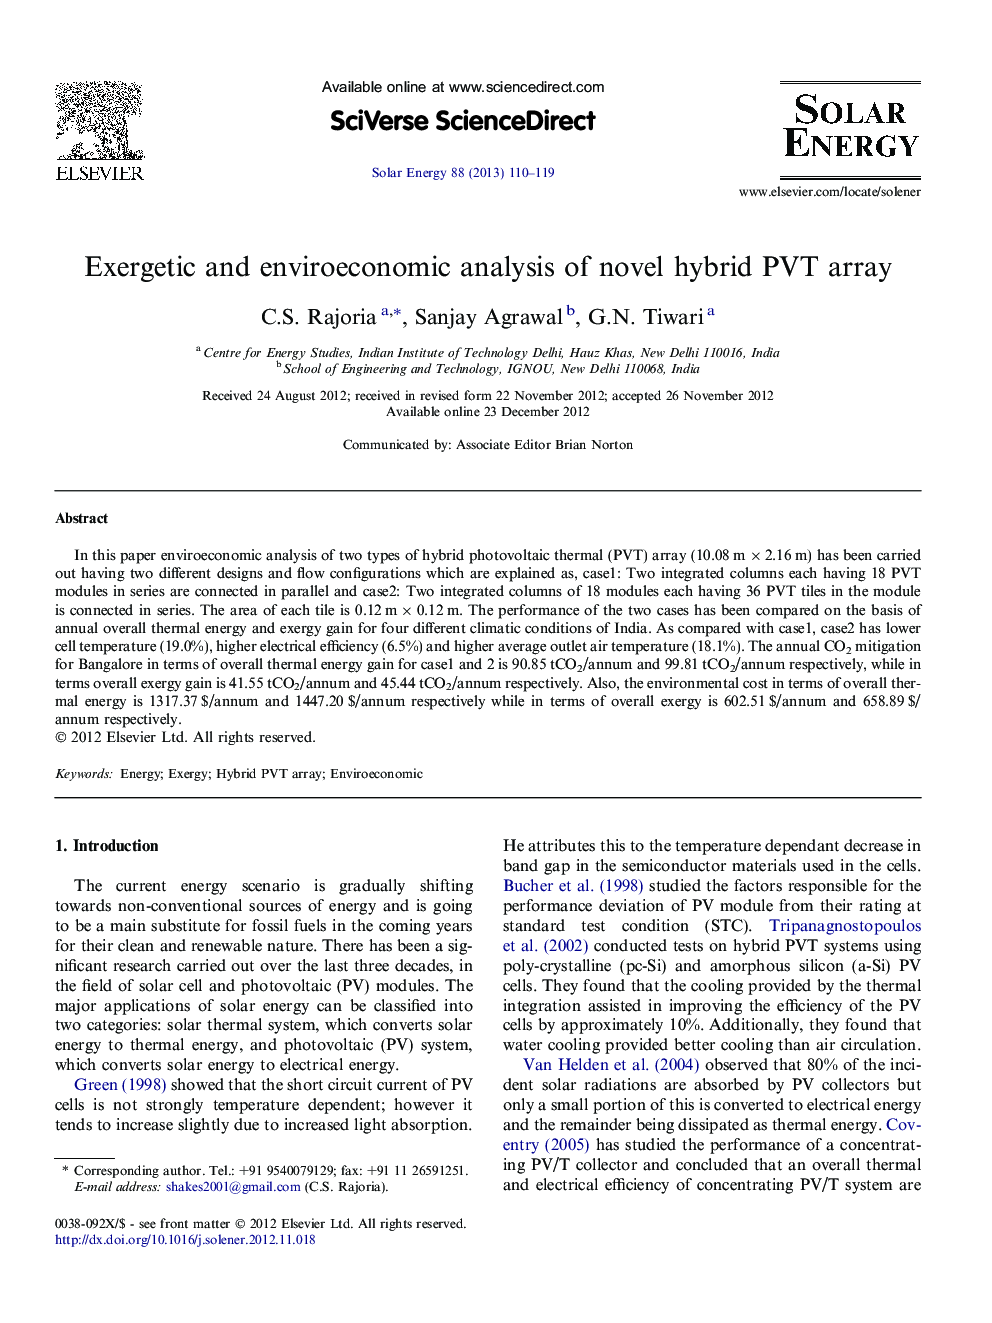 Exergetic and enviroeconomic analysis of novel hybrid PVT array